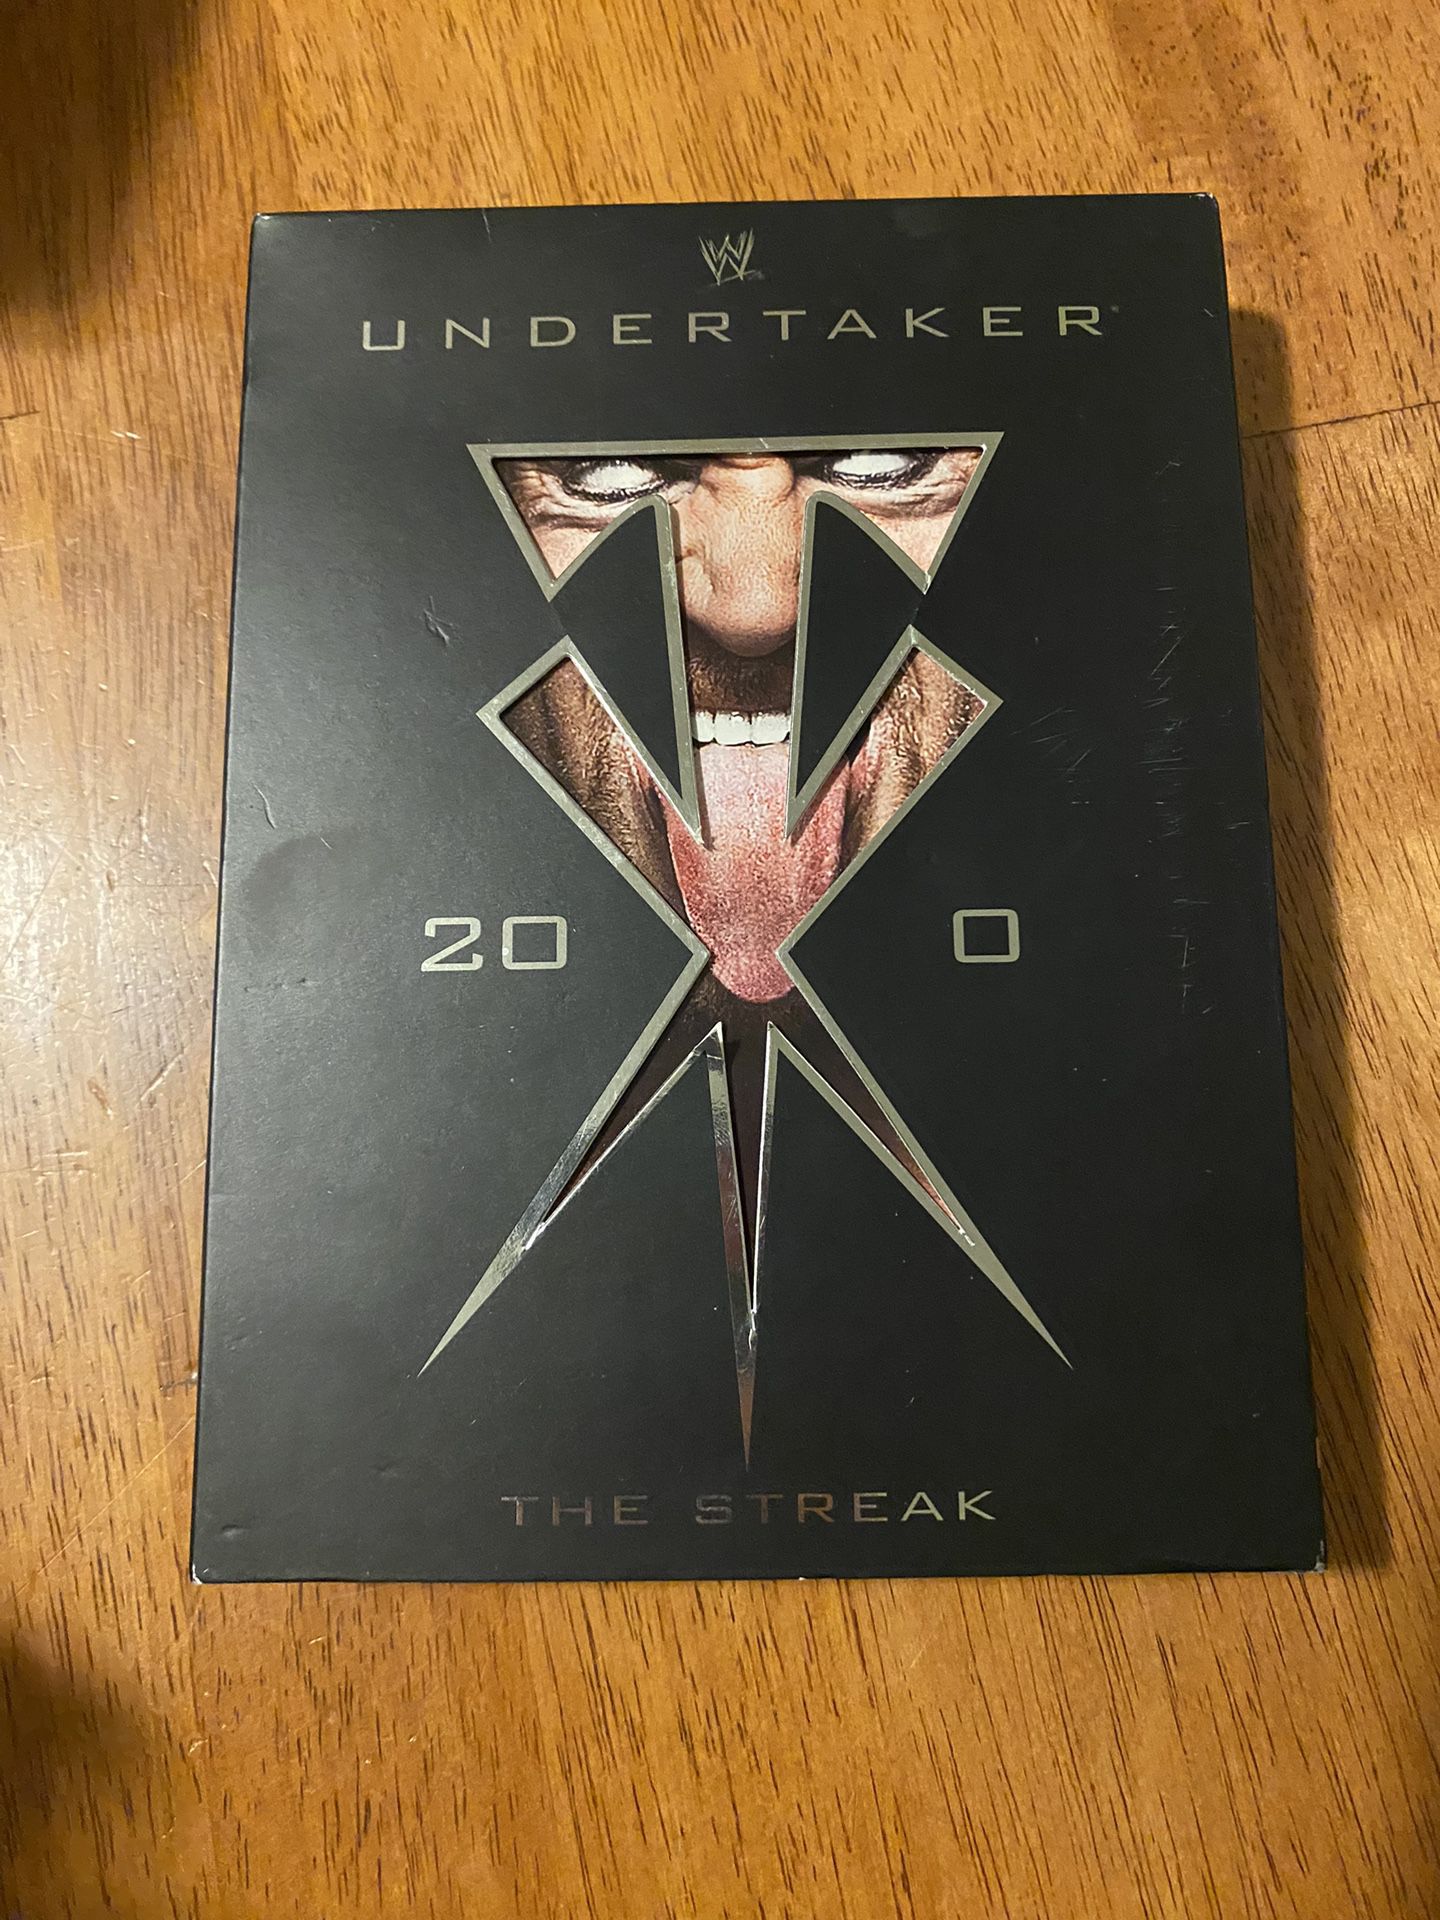 WWE The Undertaker 20-0 Streak Wrestling 4-Disc DVD Set Match Collection WWF